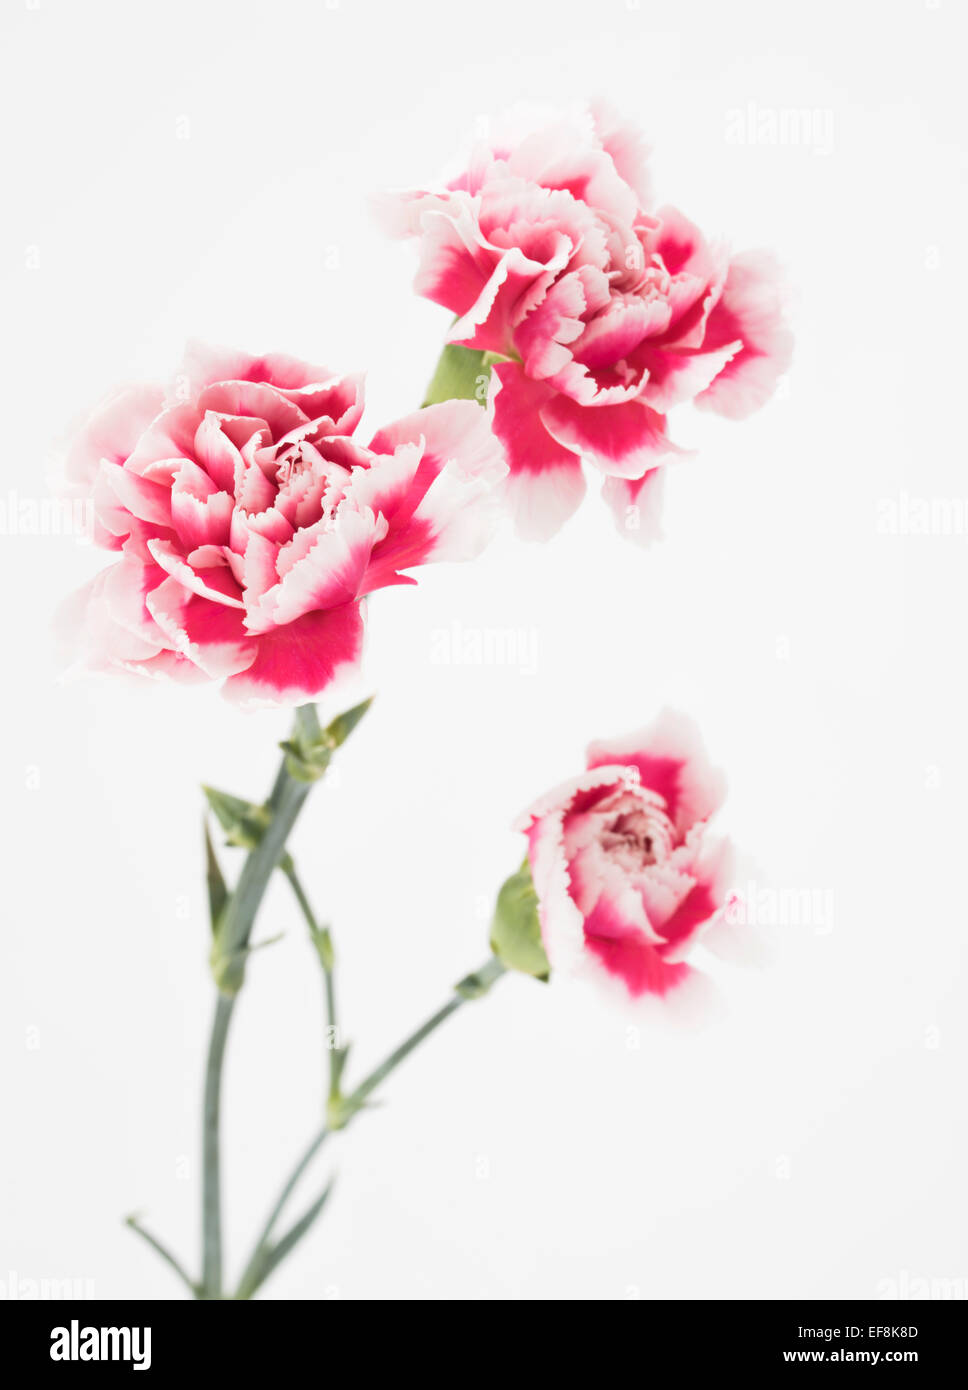 Rosa und weiße Nelke. Dianthus Caryophyllus, Nelke oder Nelke pink Stockfoto